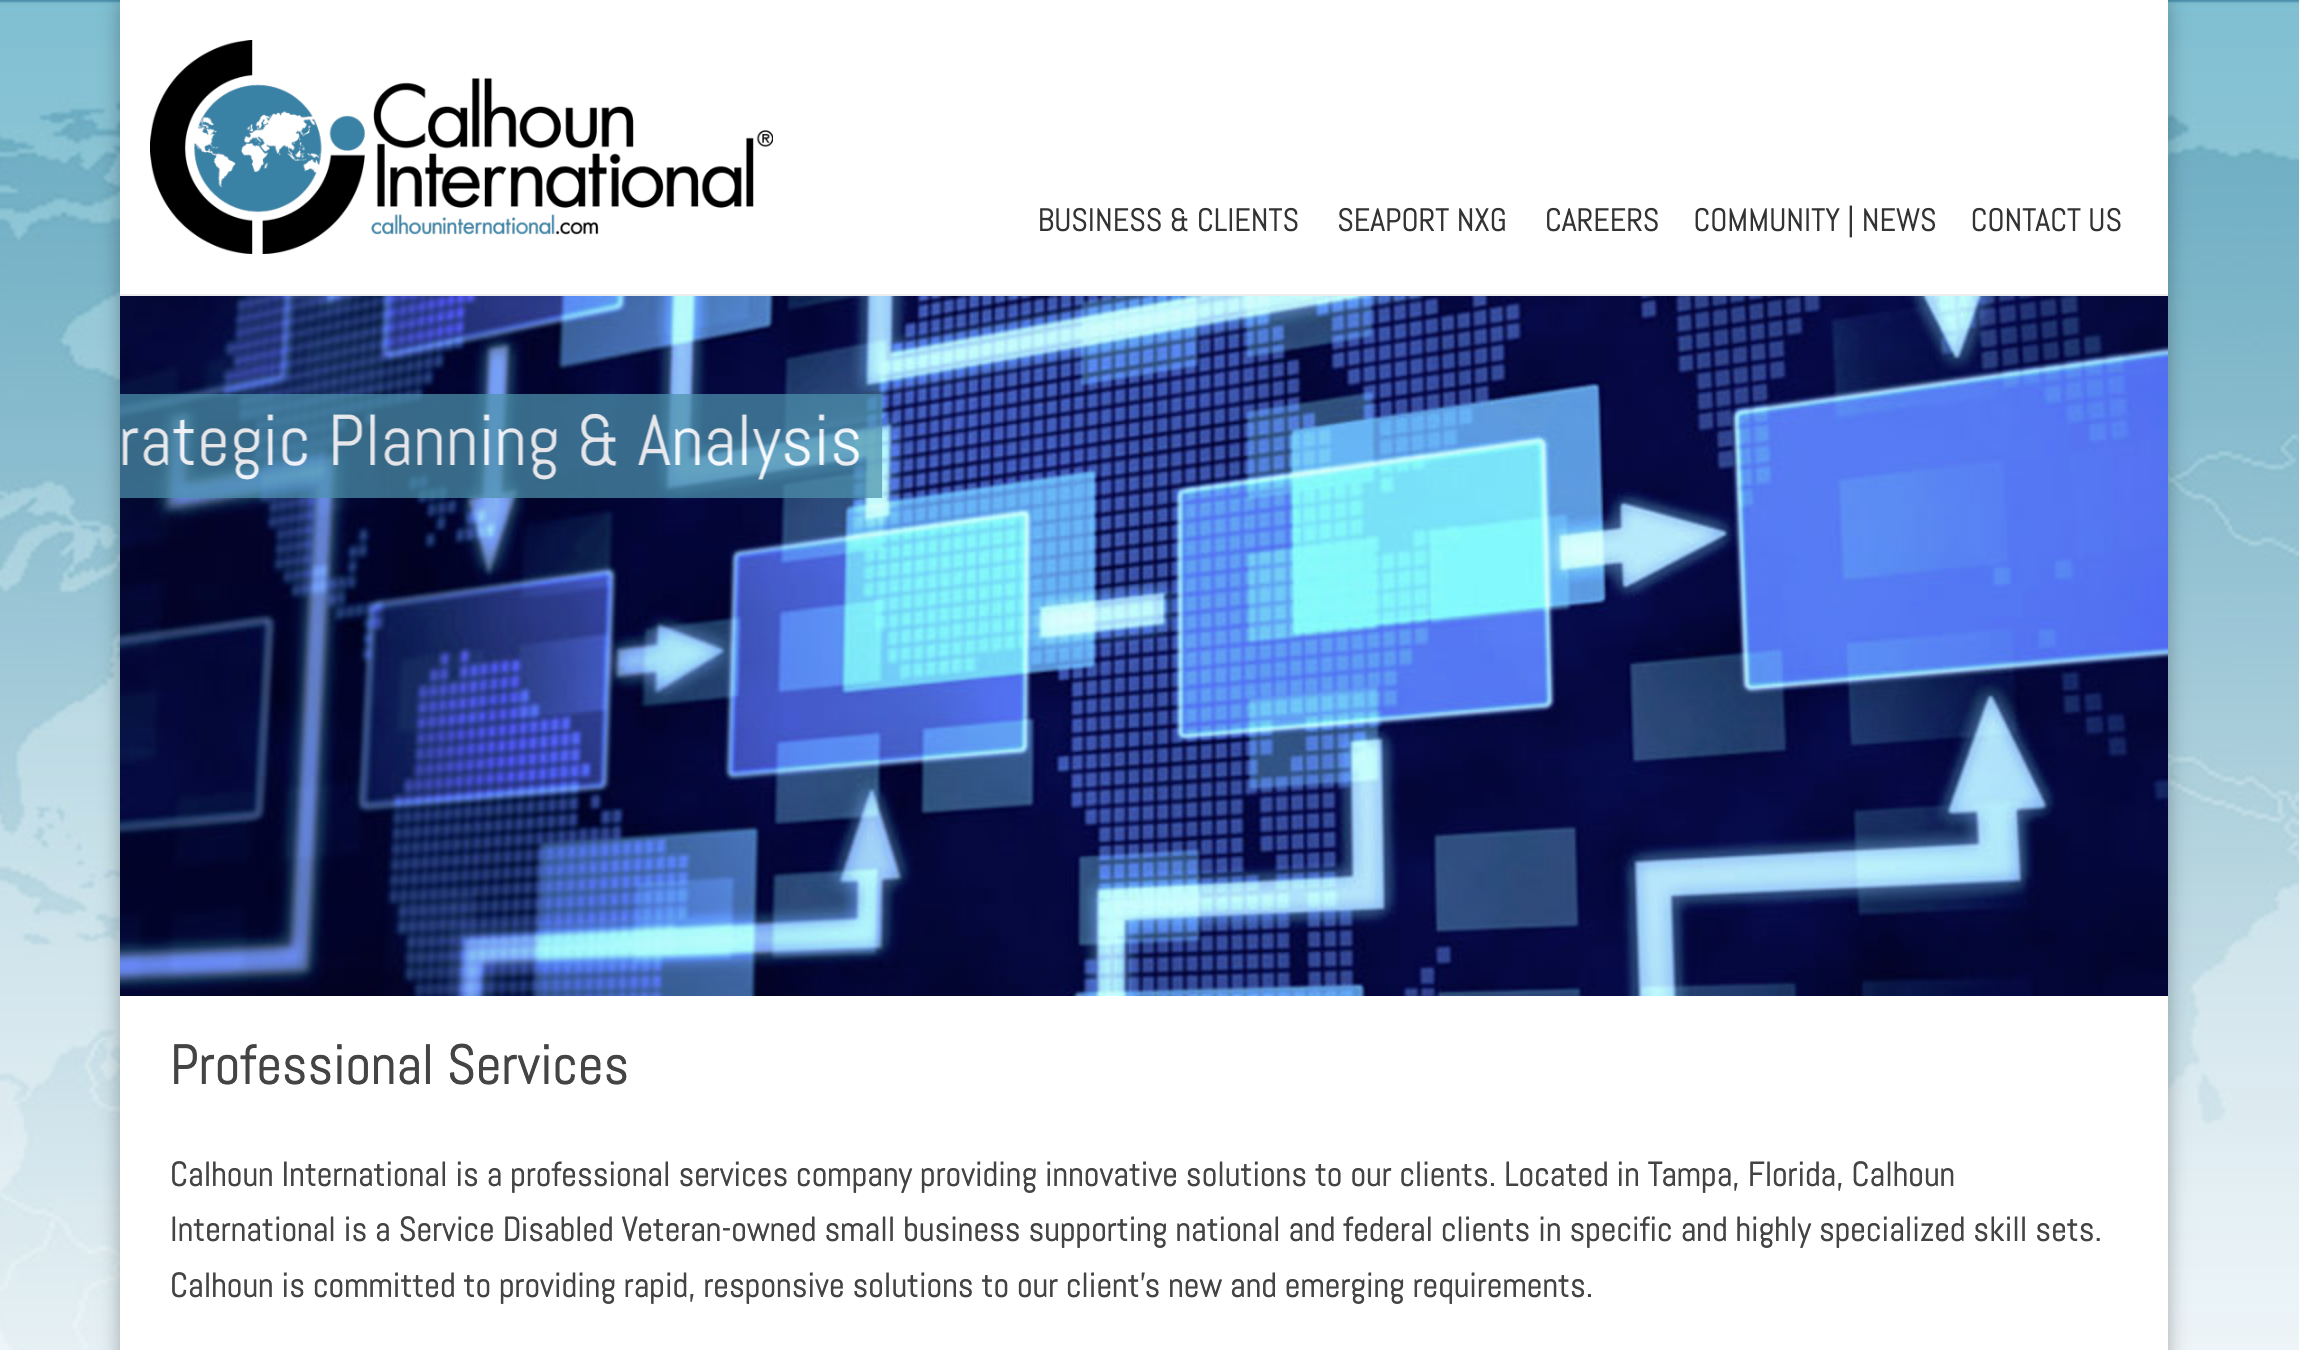 Website of Calhoun International